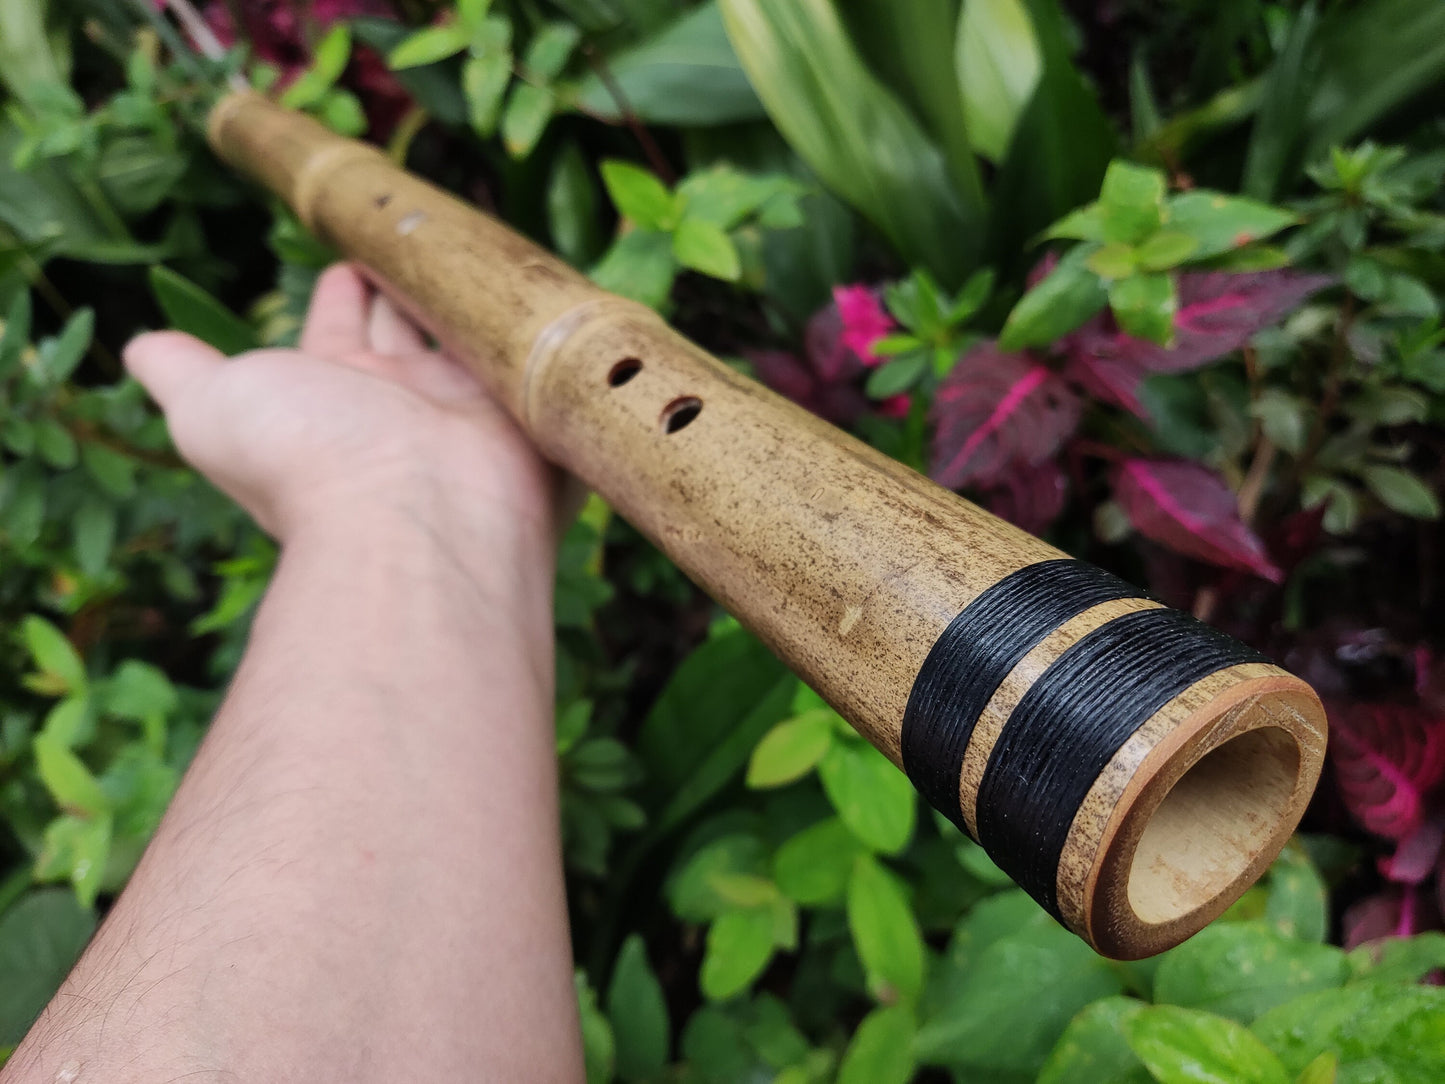 Exotic Meditative Akebono Bamboo Flute in the key of C4 | Sopro Flutes